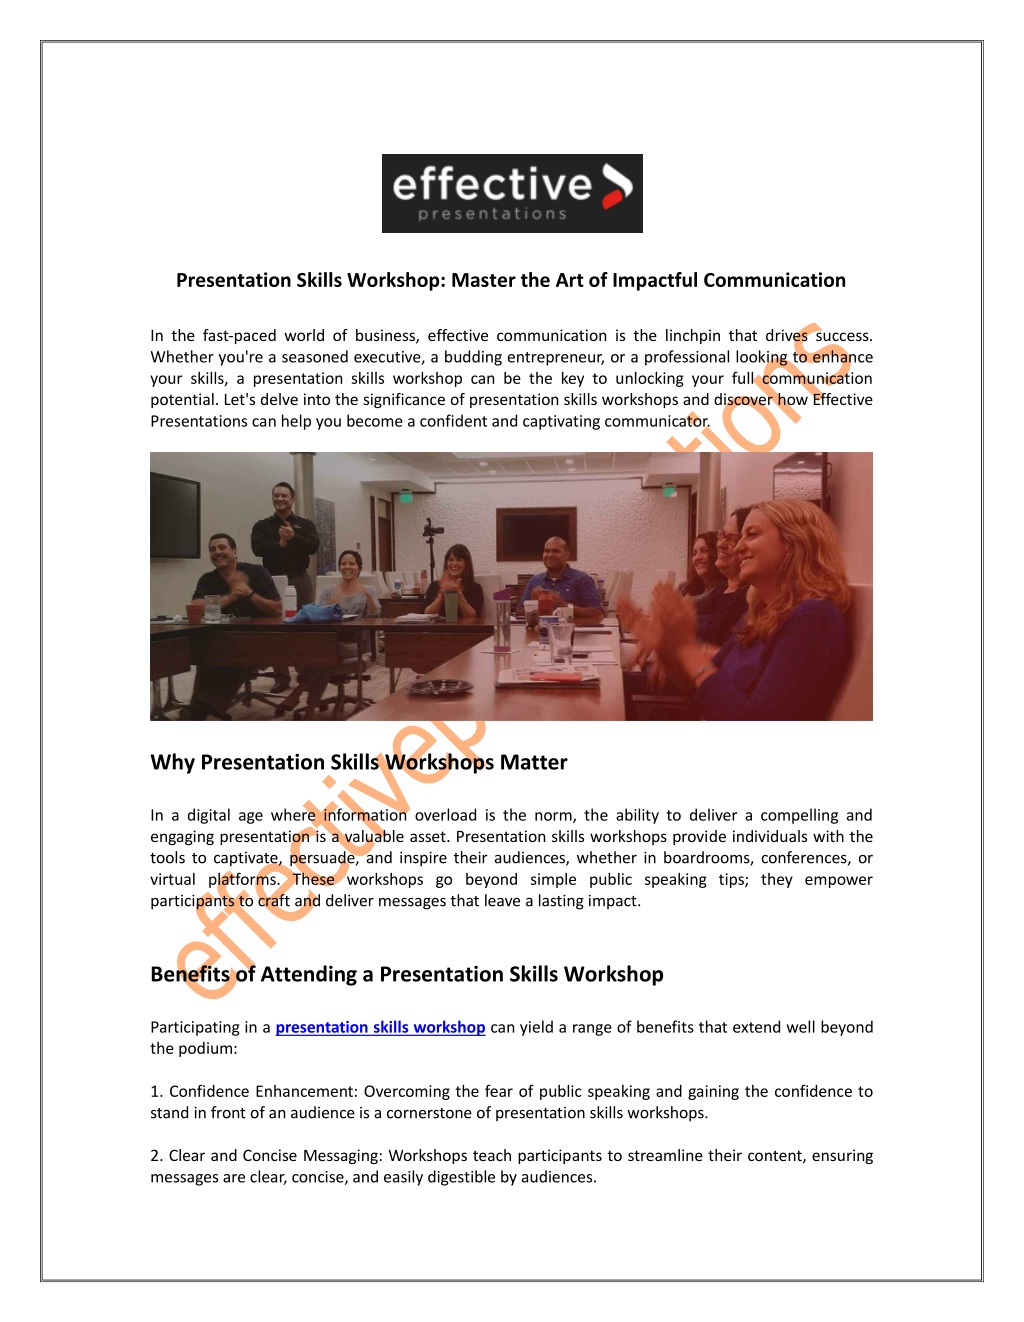 PPT - Presentation Skills Workshop Master the Art of Impactful